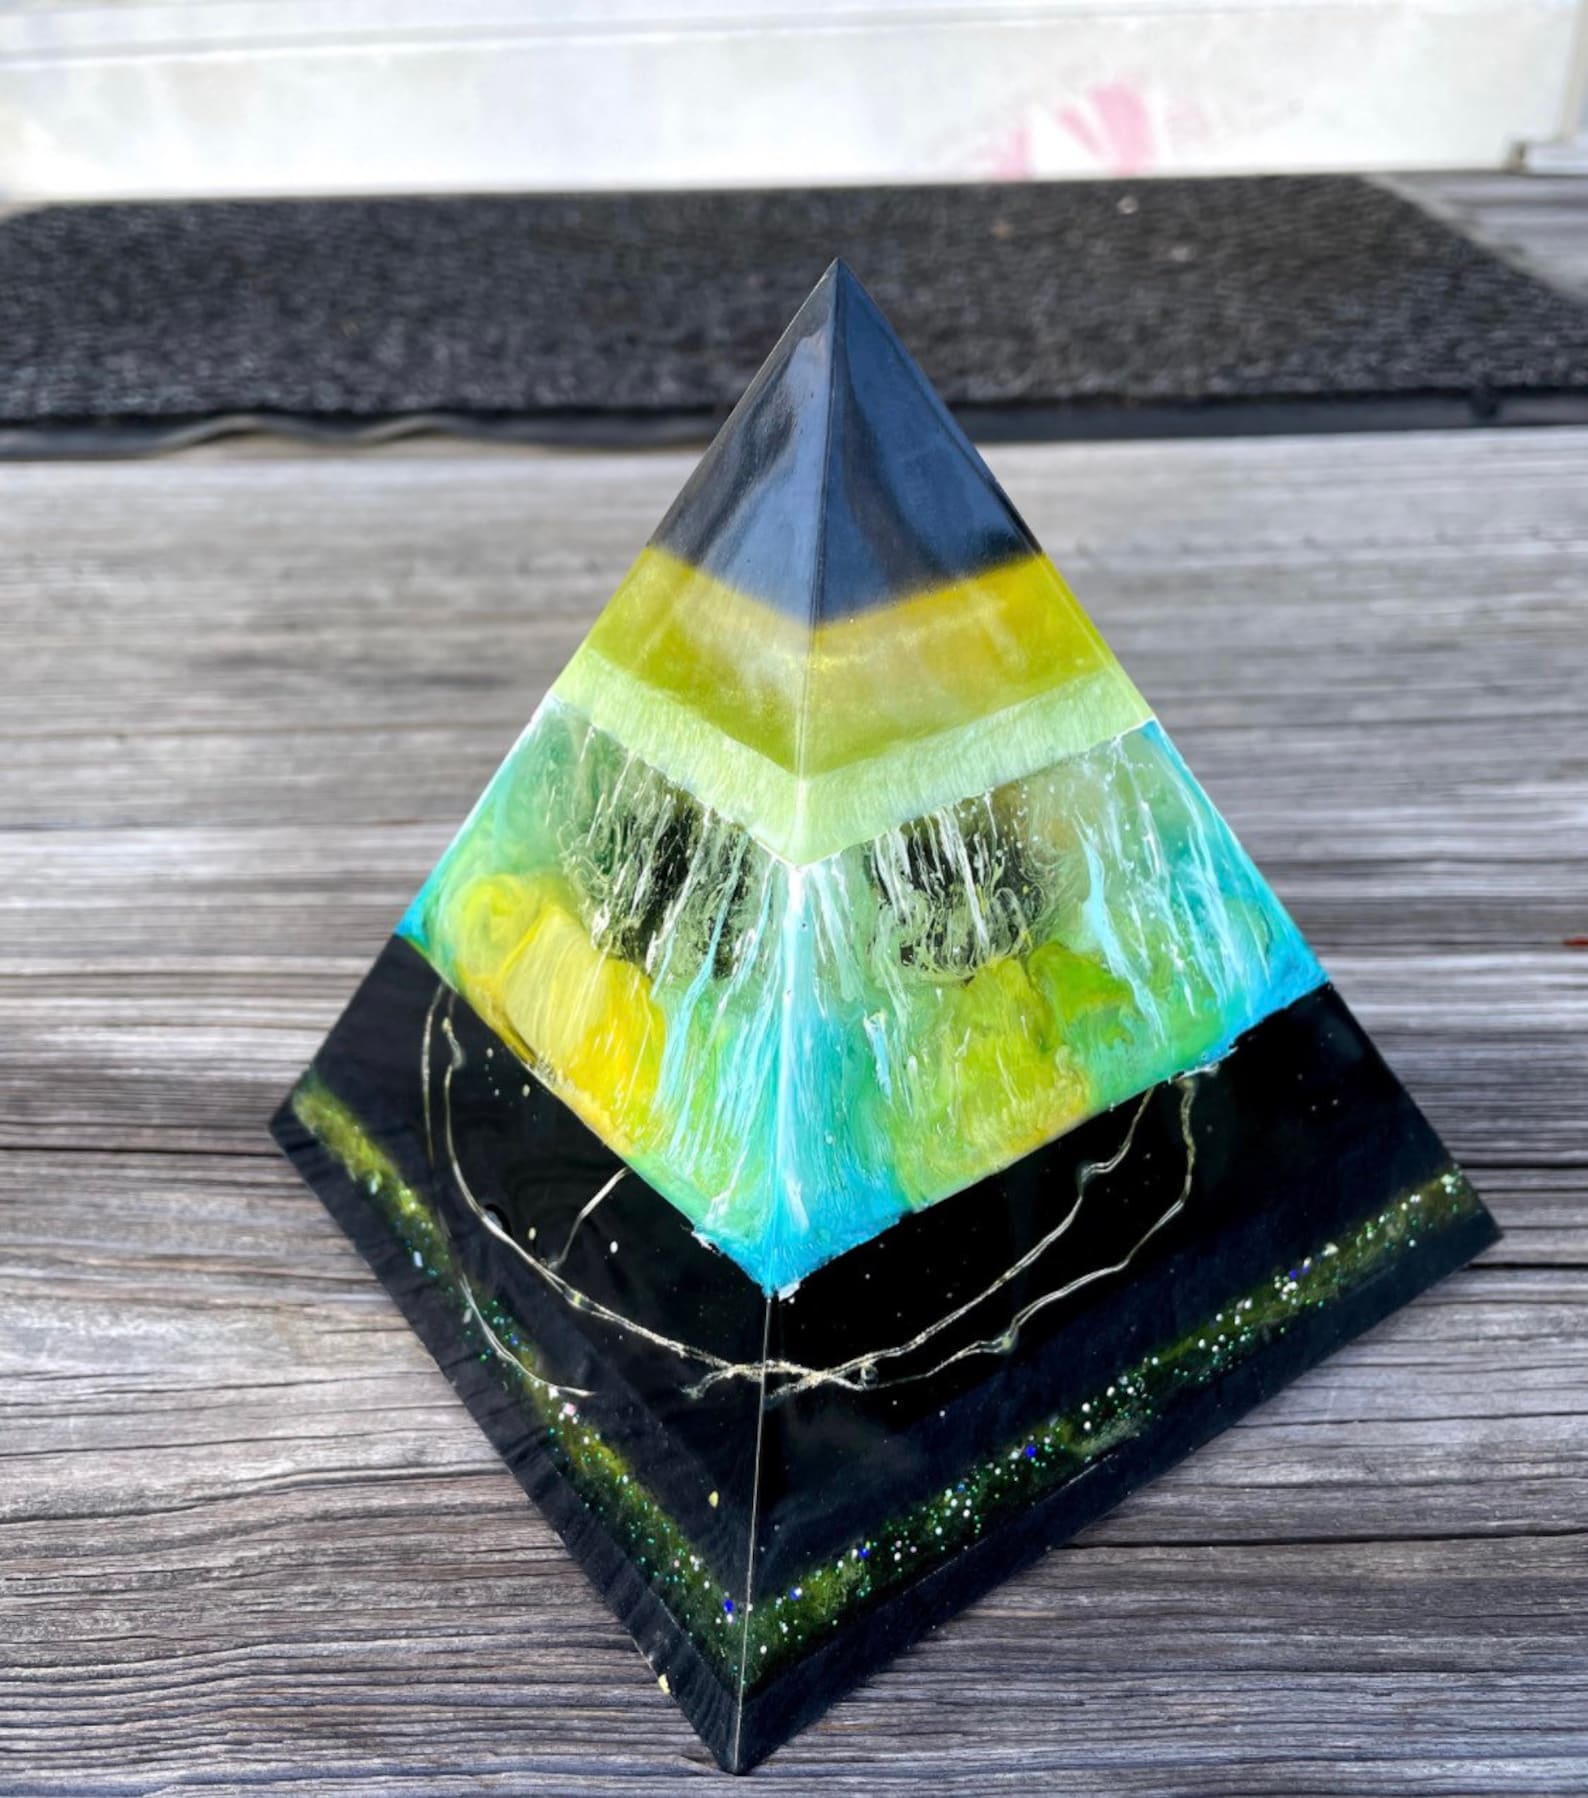 Large Resin Pyramid Light | Etsy